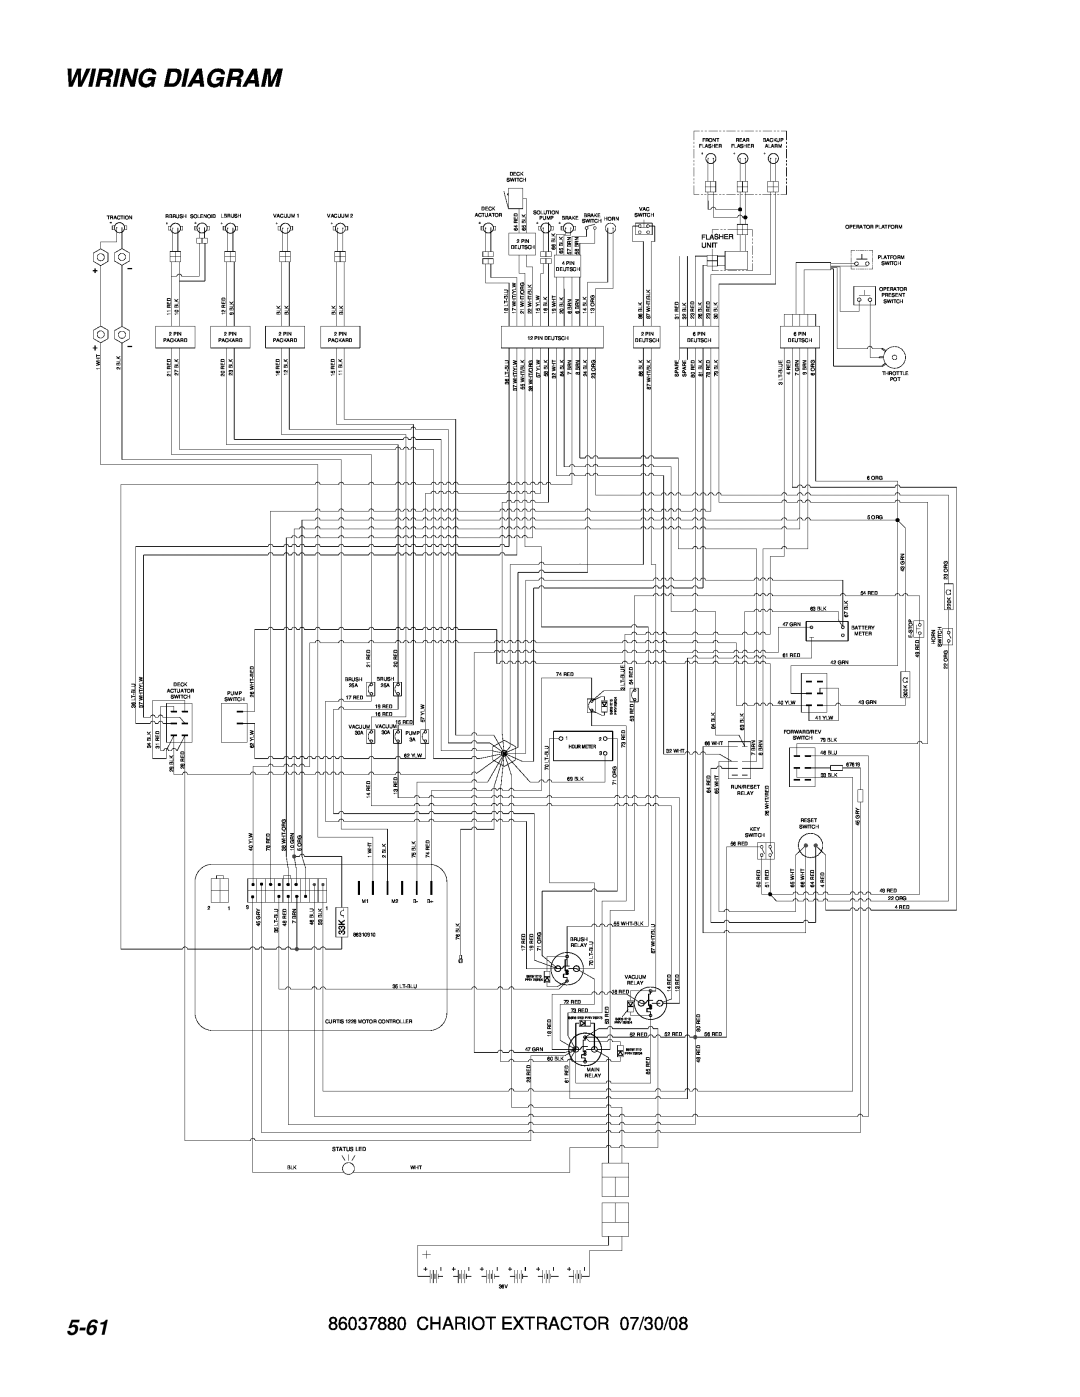 Windsor 86037880, CEE24, CE24X manual Wiring Diagram, 5-61, 2 PIN 